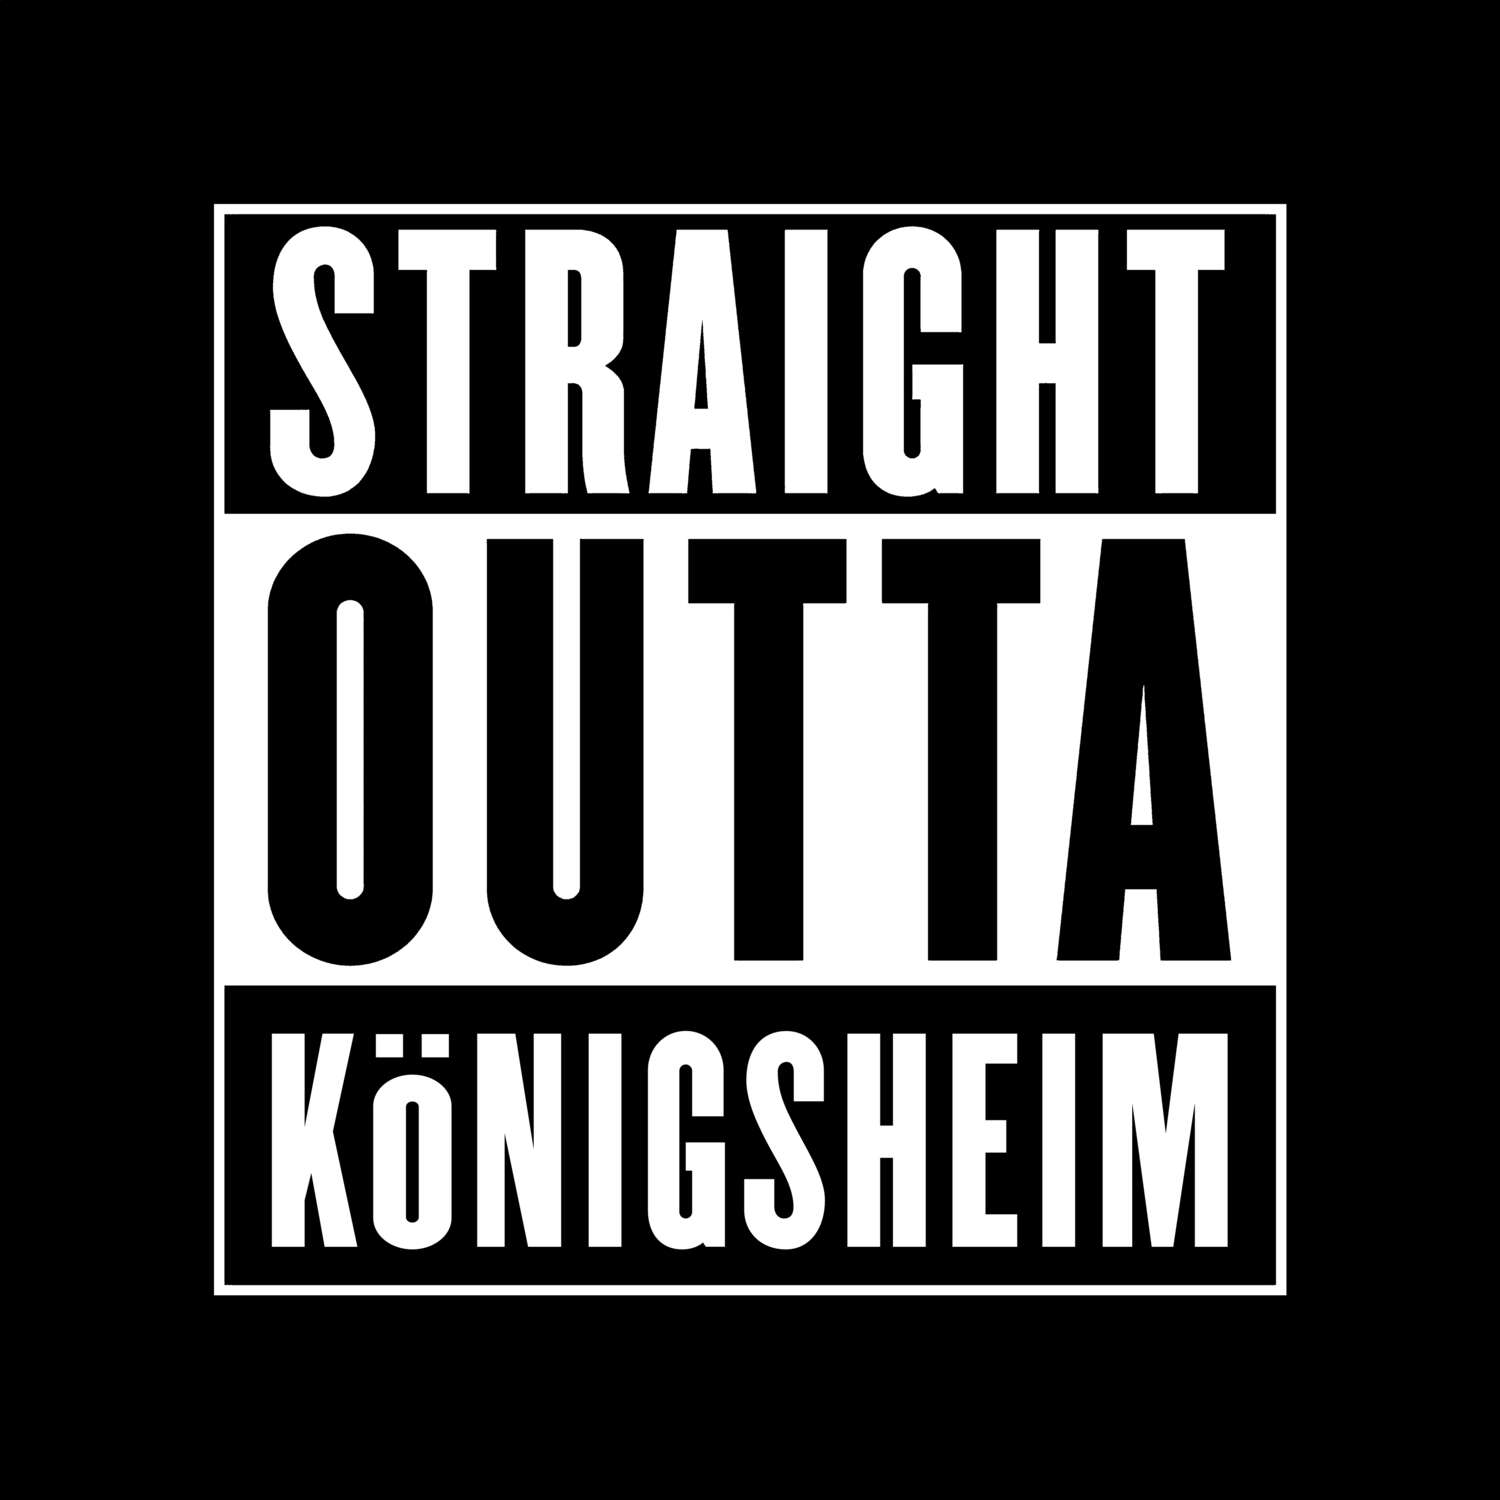 Königsheim T-Shirt »Straight Outta«